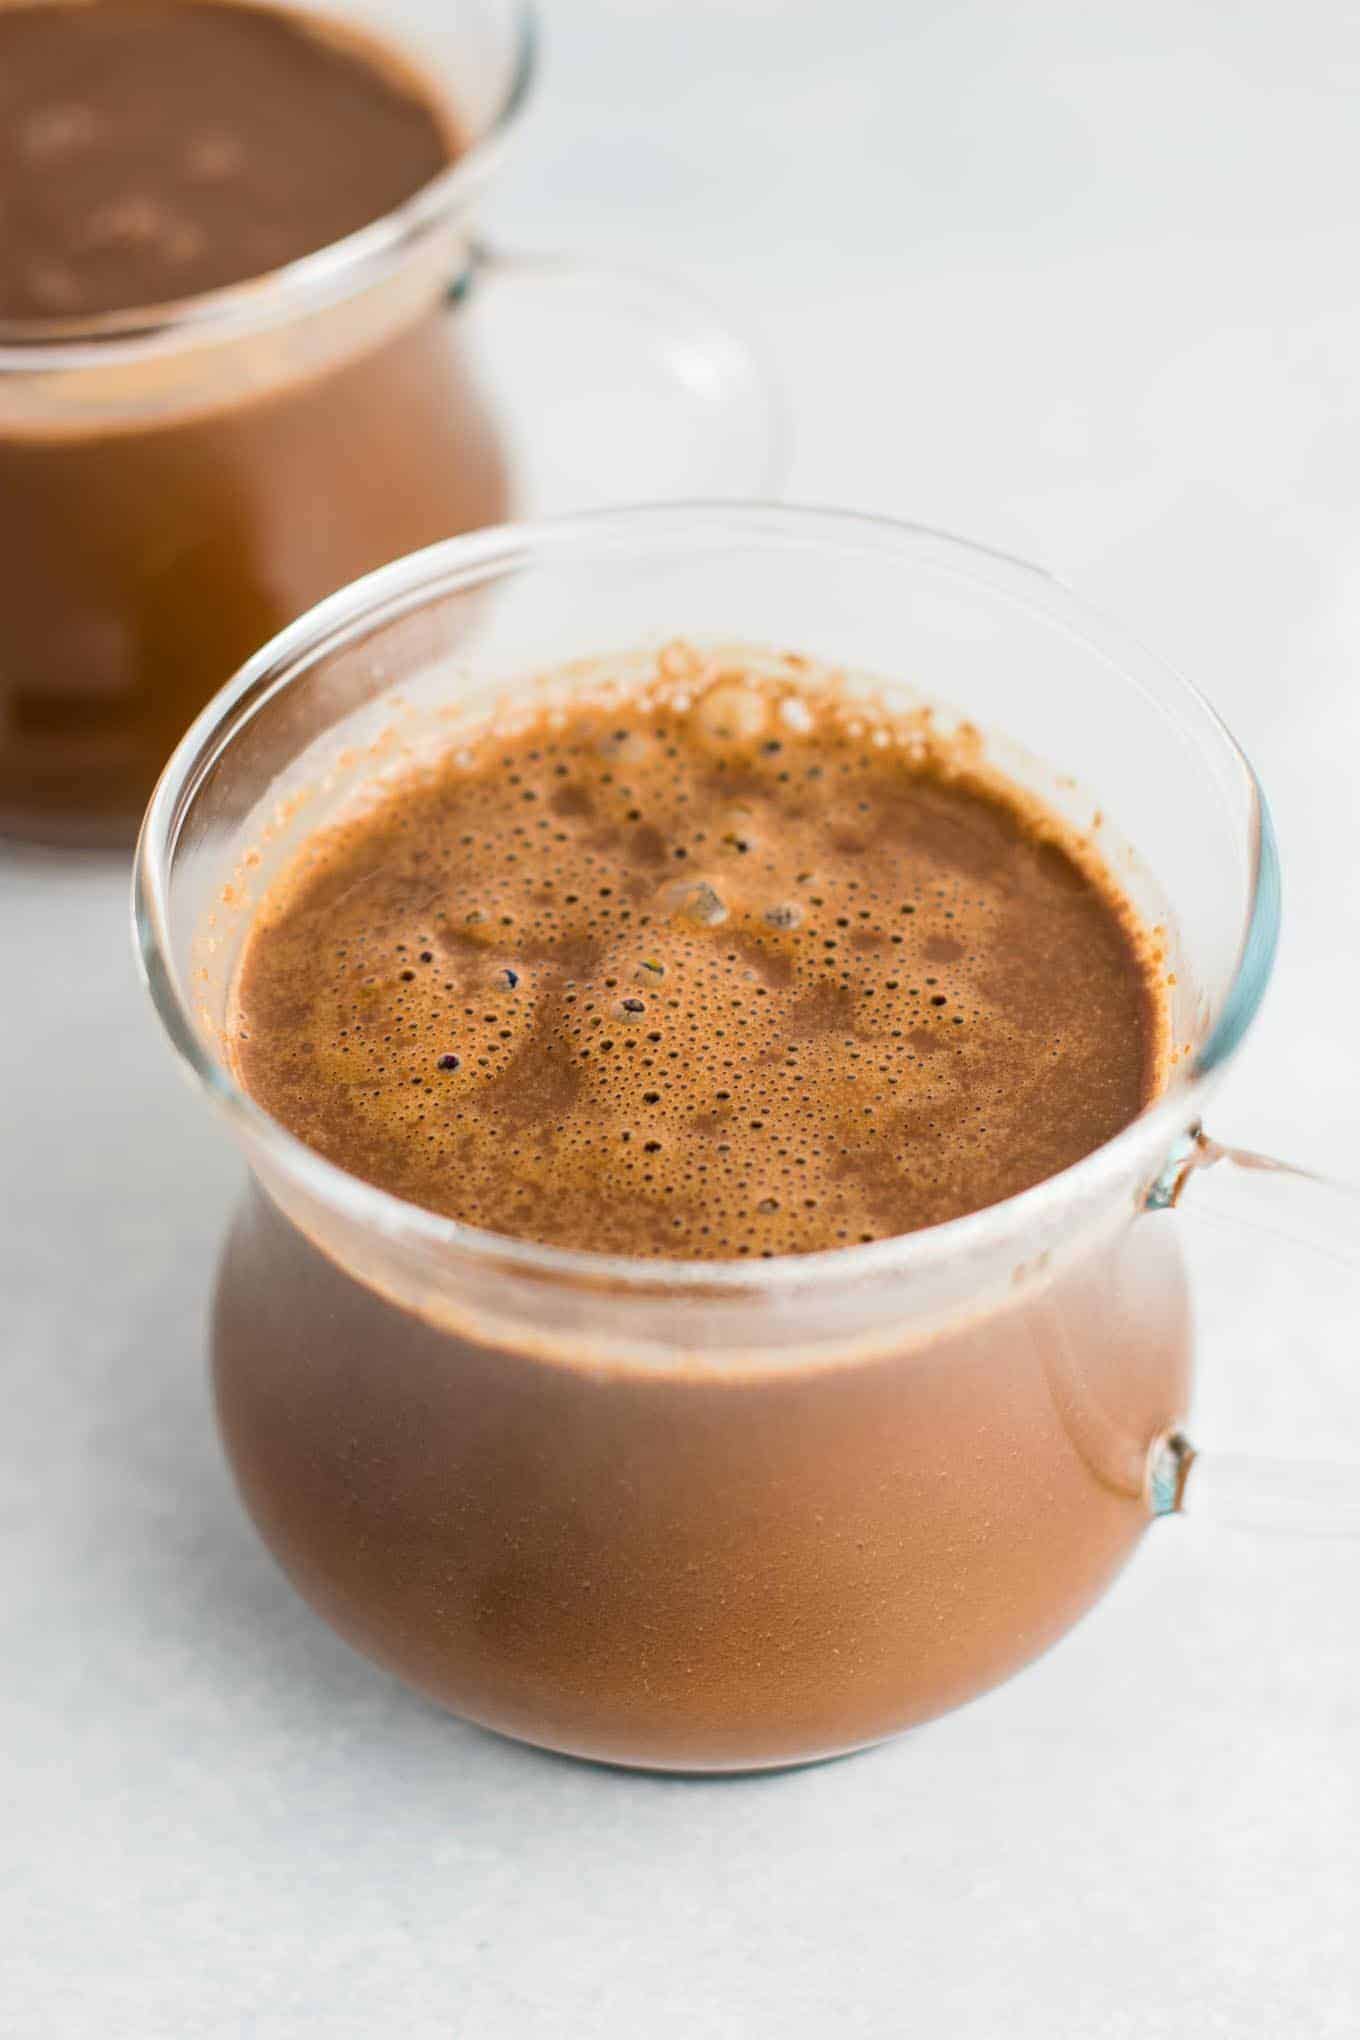 Easy 4 Ingredient vegan hot chocolate recipe made with almond milk. Dairy free, gluten free, and vegan. The perfect cozy winter drink! #vegan #hotchocolate #drinks #christmas #dairyfree 